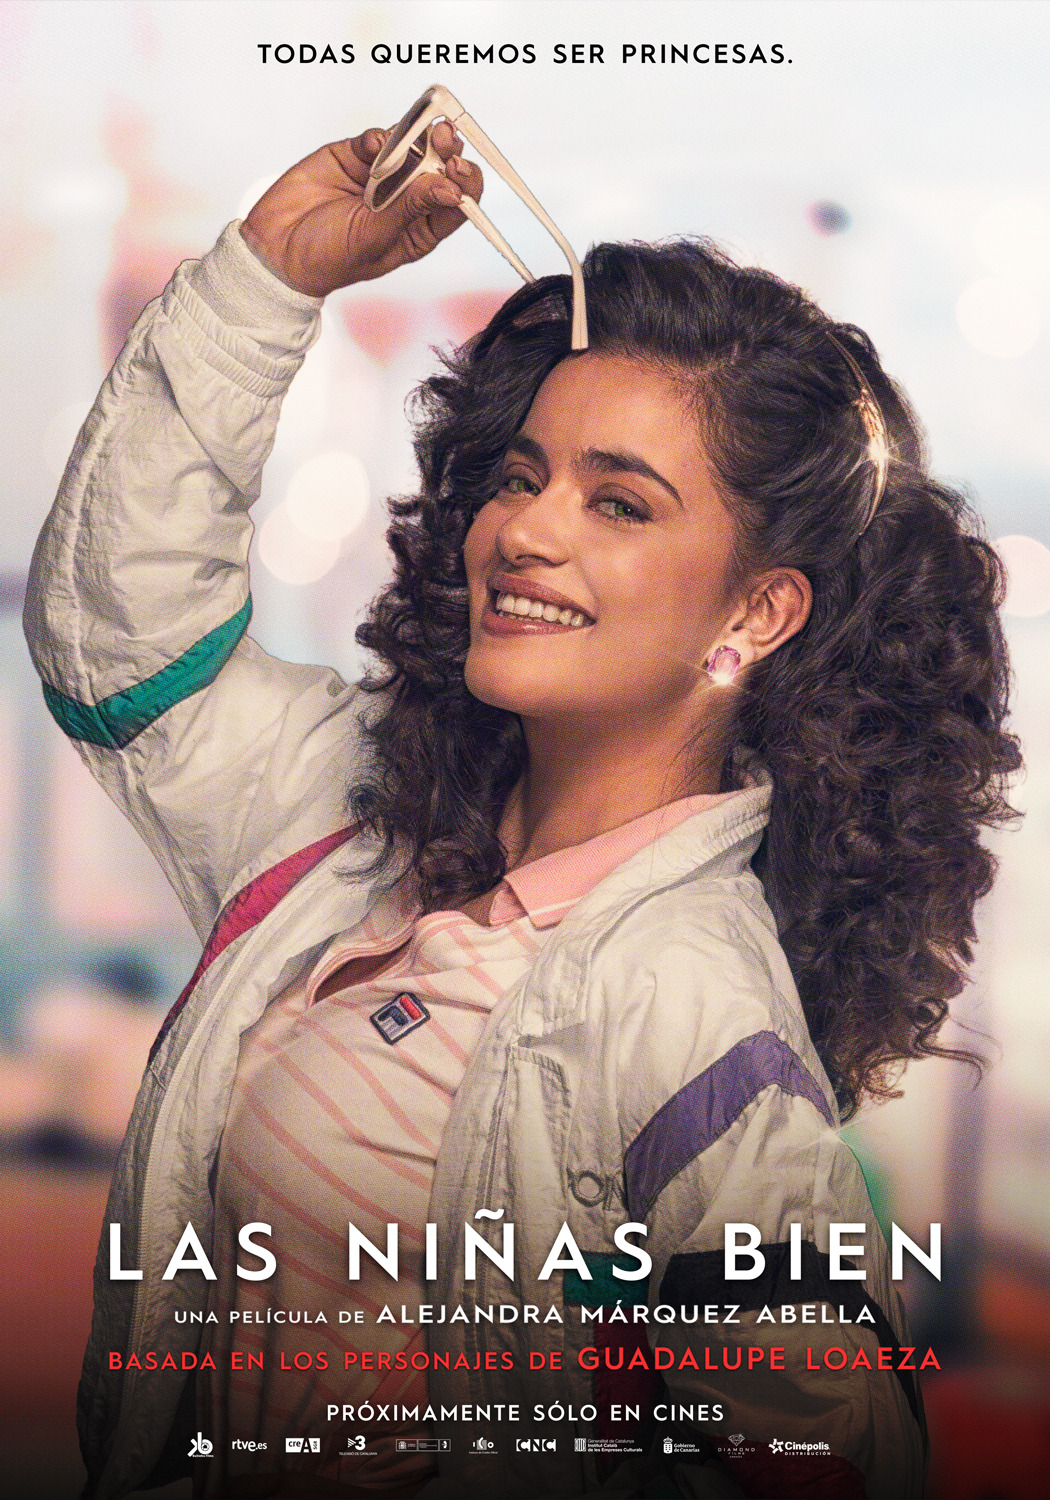 Extra Large Movie Poster Image for Las niñas bien (#8 of 16)